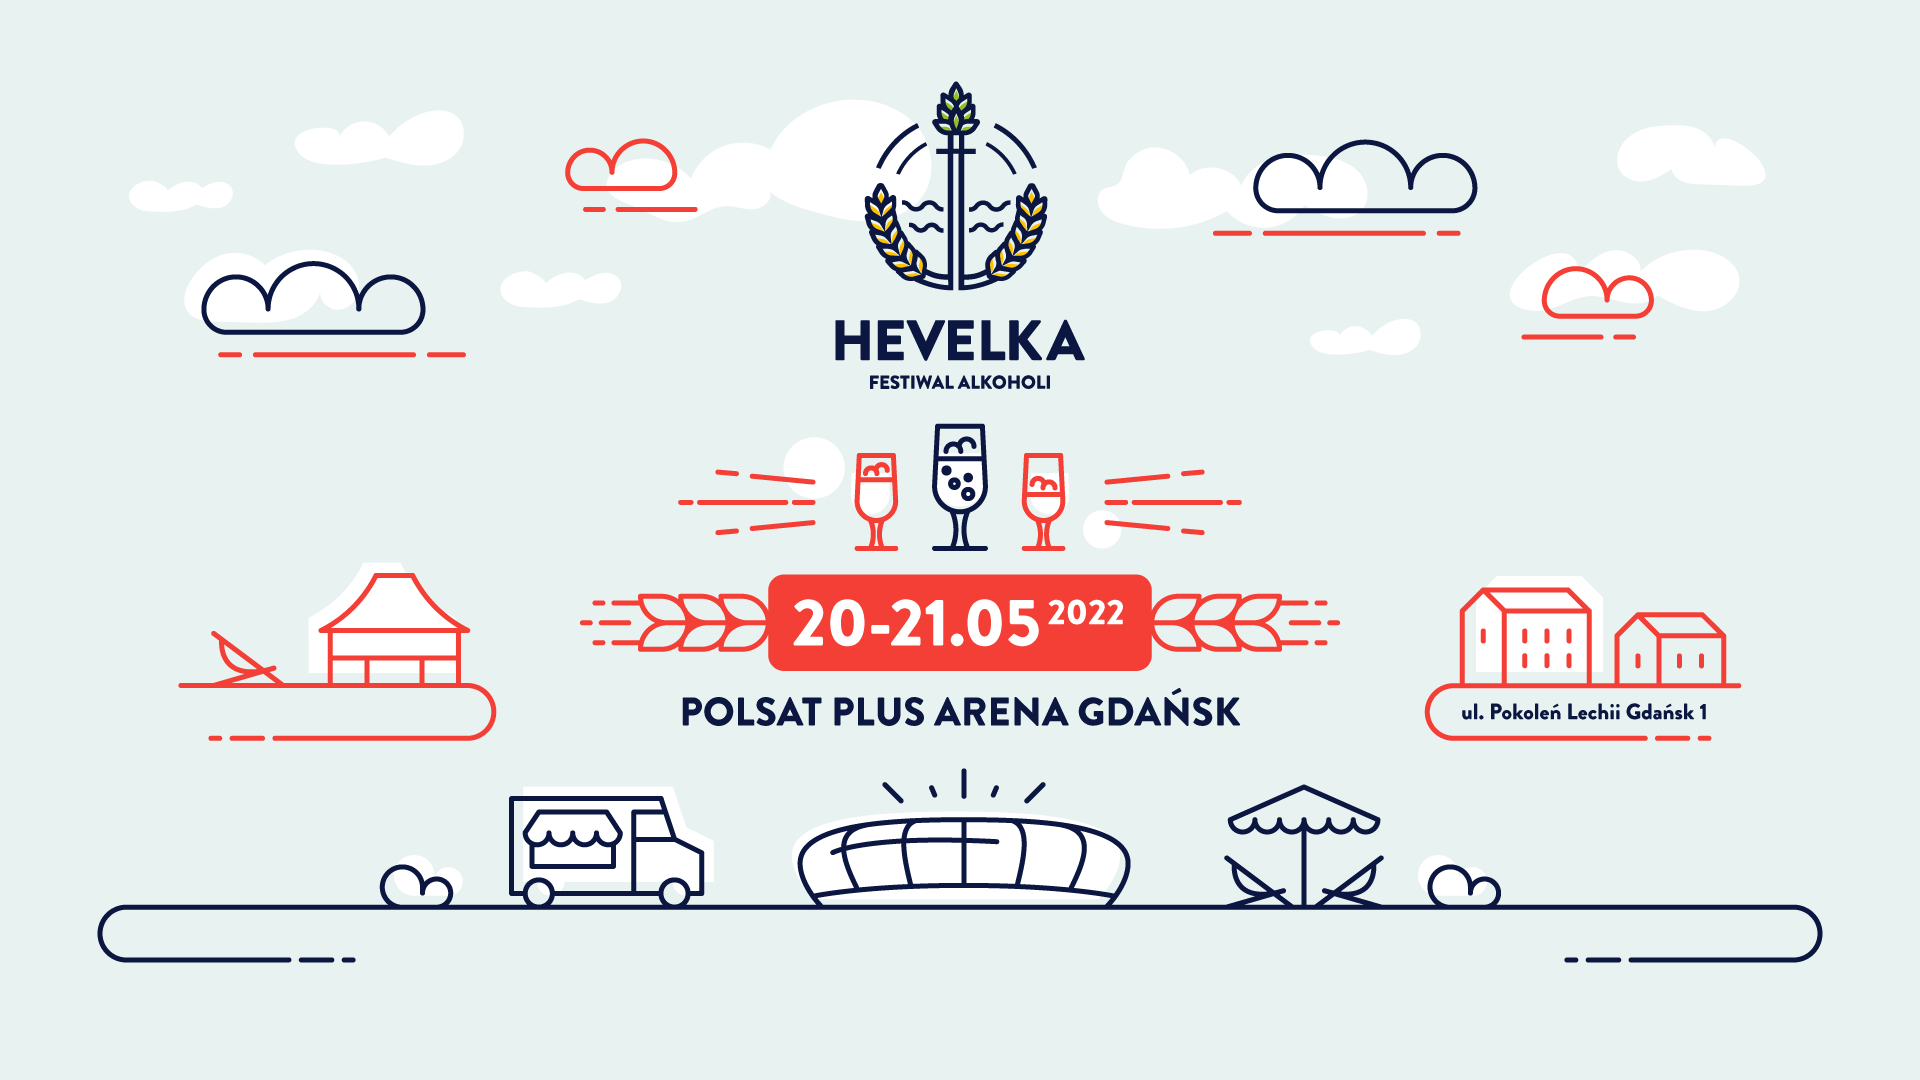 baner promujący festiwal Hevelka 20 - 21 maja 2022 roku na Polsat Plus Arena Gdańsk